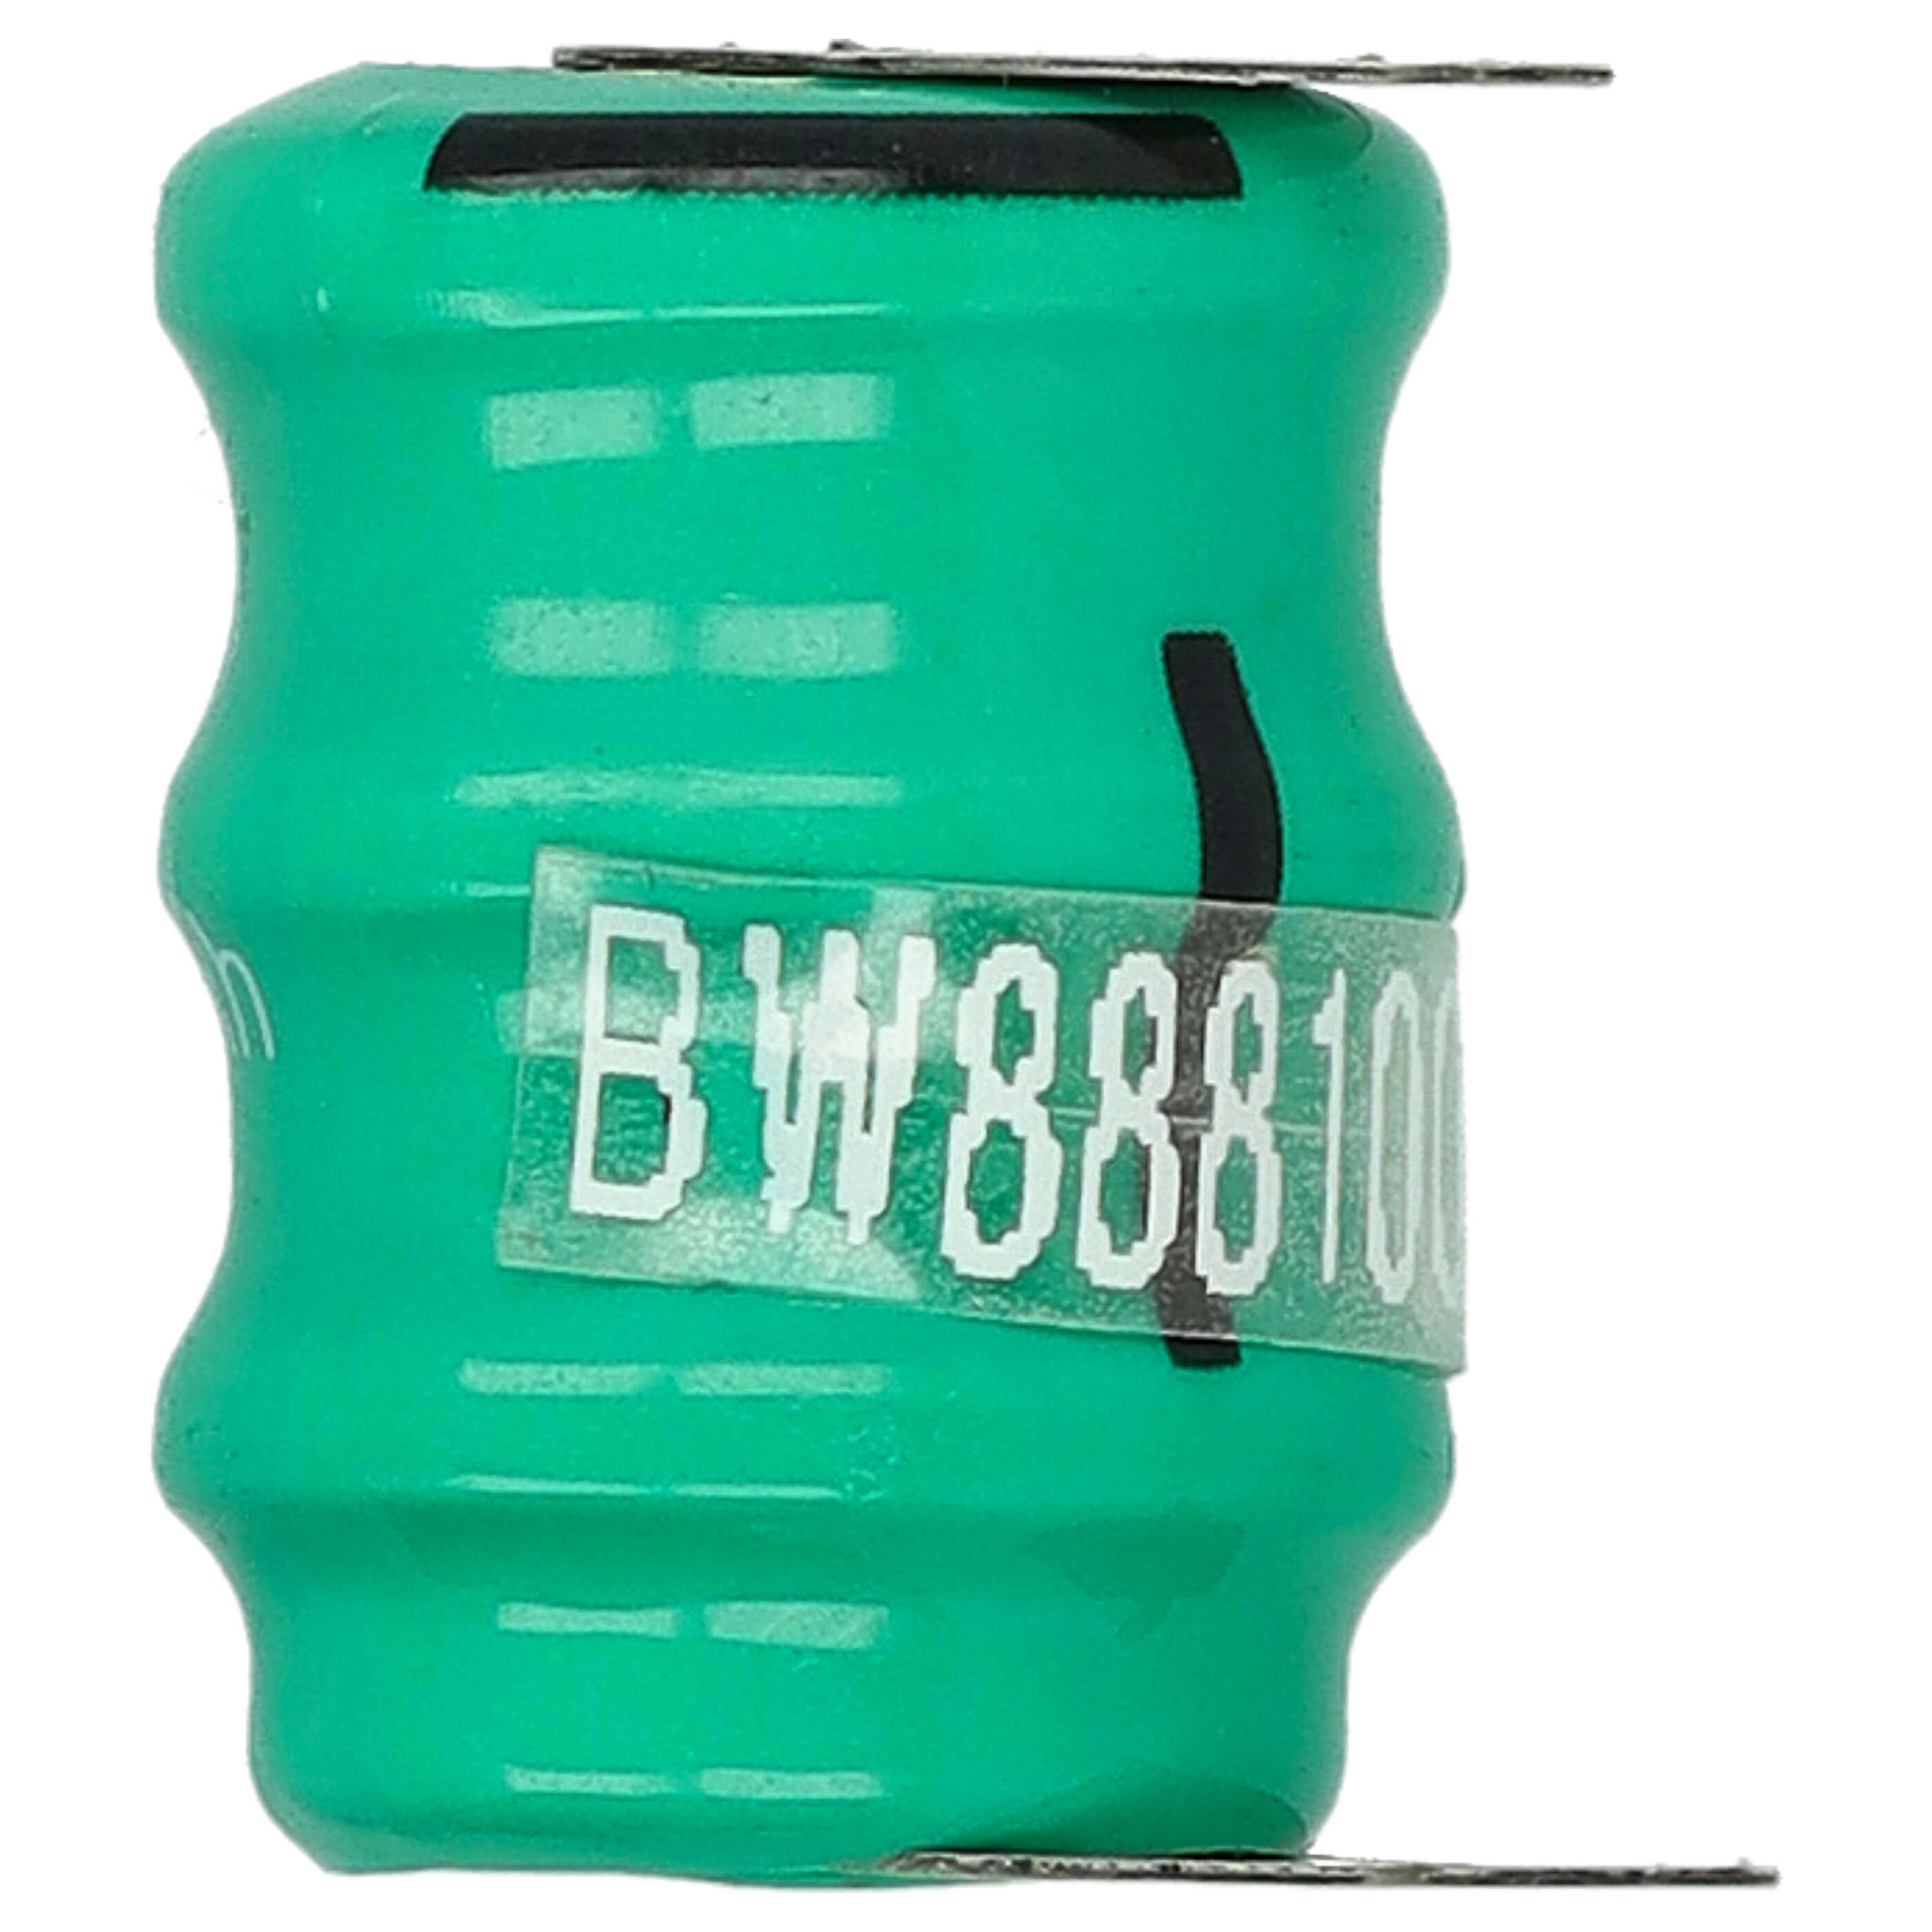 Akumulator guzikowy (3x ogniwo) typ 3 pin do modeli, lamp solarnych itp. zamiennik - 40 mAh 3,6 V NiMH